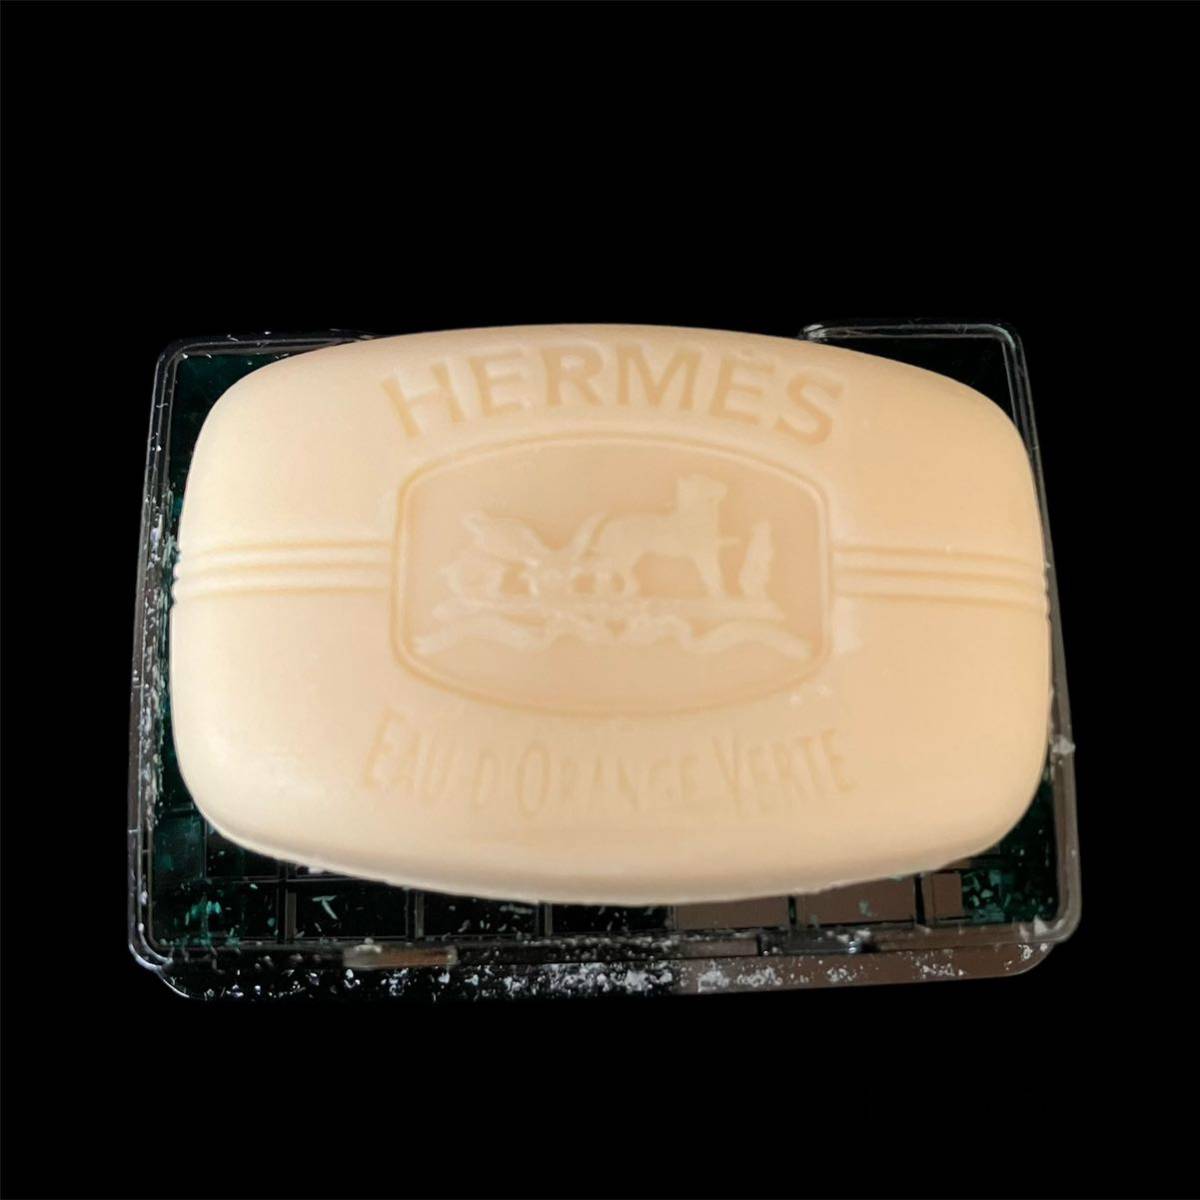 HERMES ドランジュ ヴェルト ソープセット エルメス 石鹸 ケース付 元箱有 フランス製 オーデコロン パルファムソープ _画像5